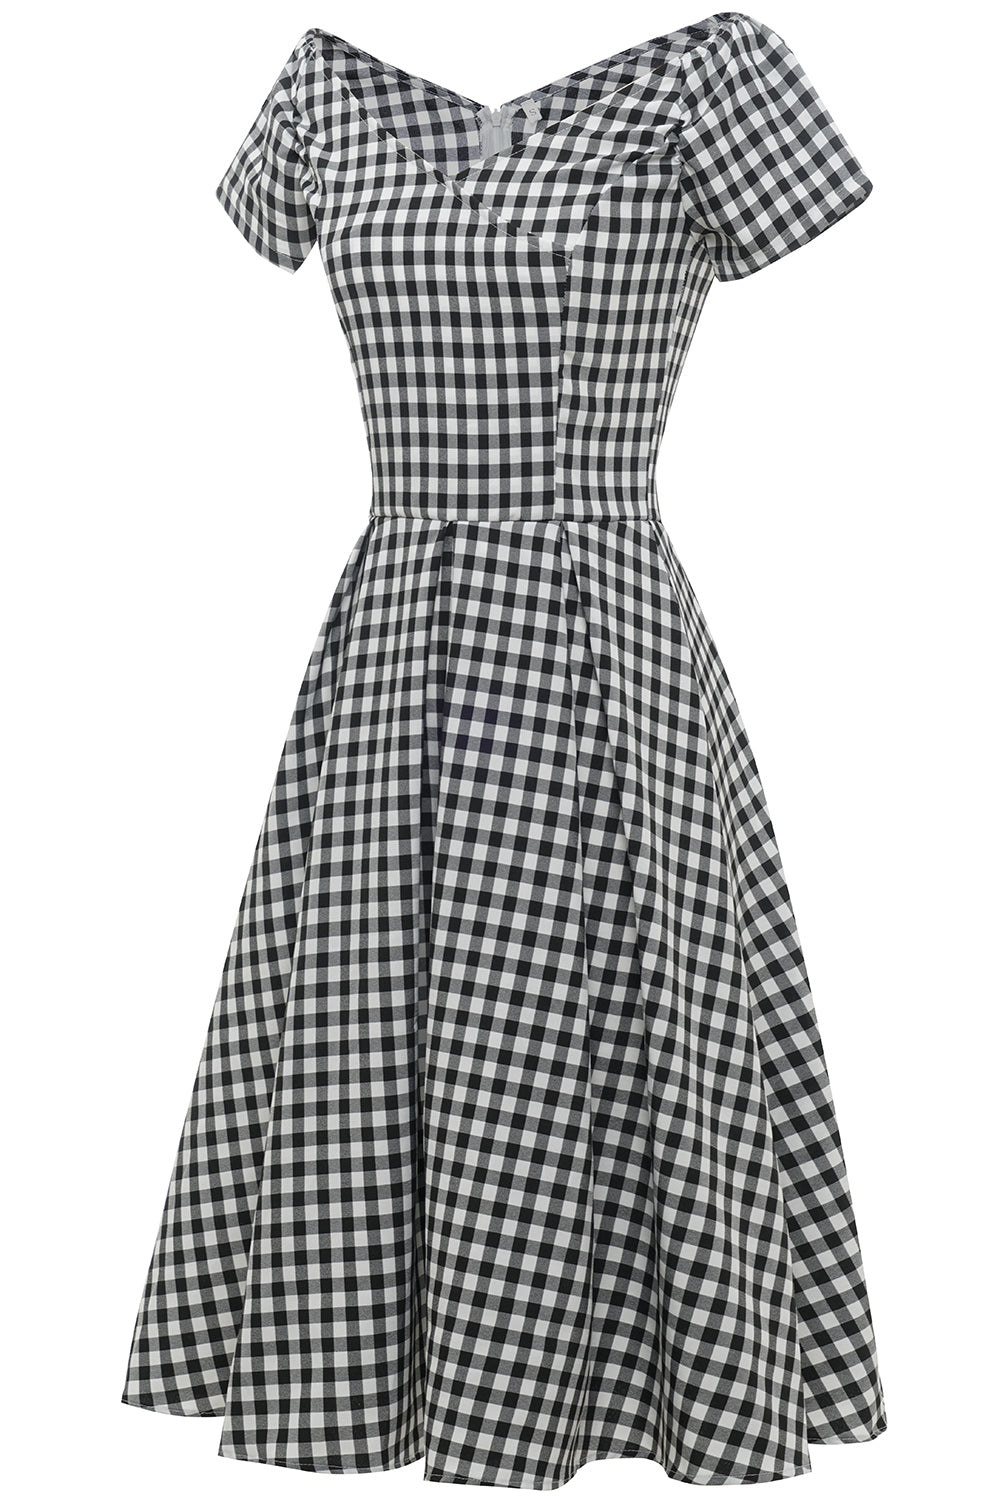 Zapaka Women Vintage Dress 1950s Black and White Plaid Swing Dress with ...